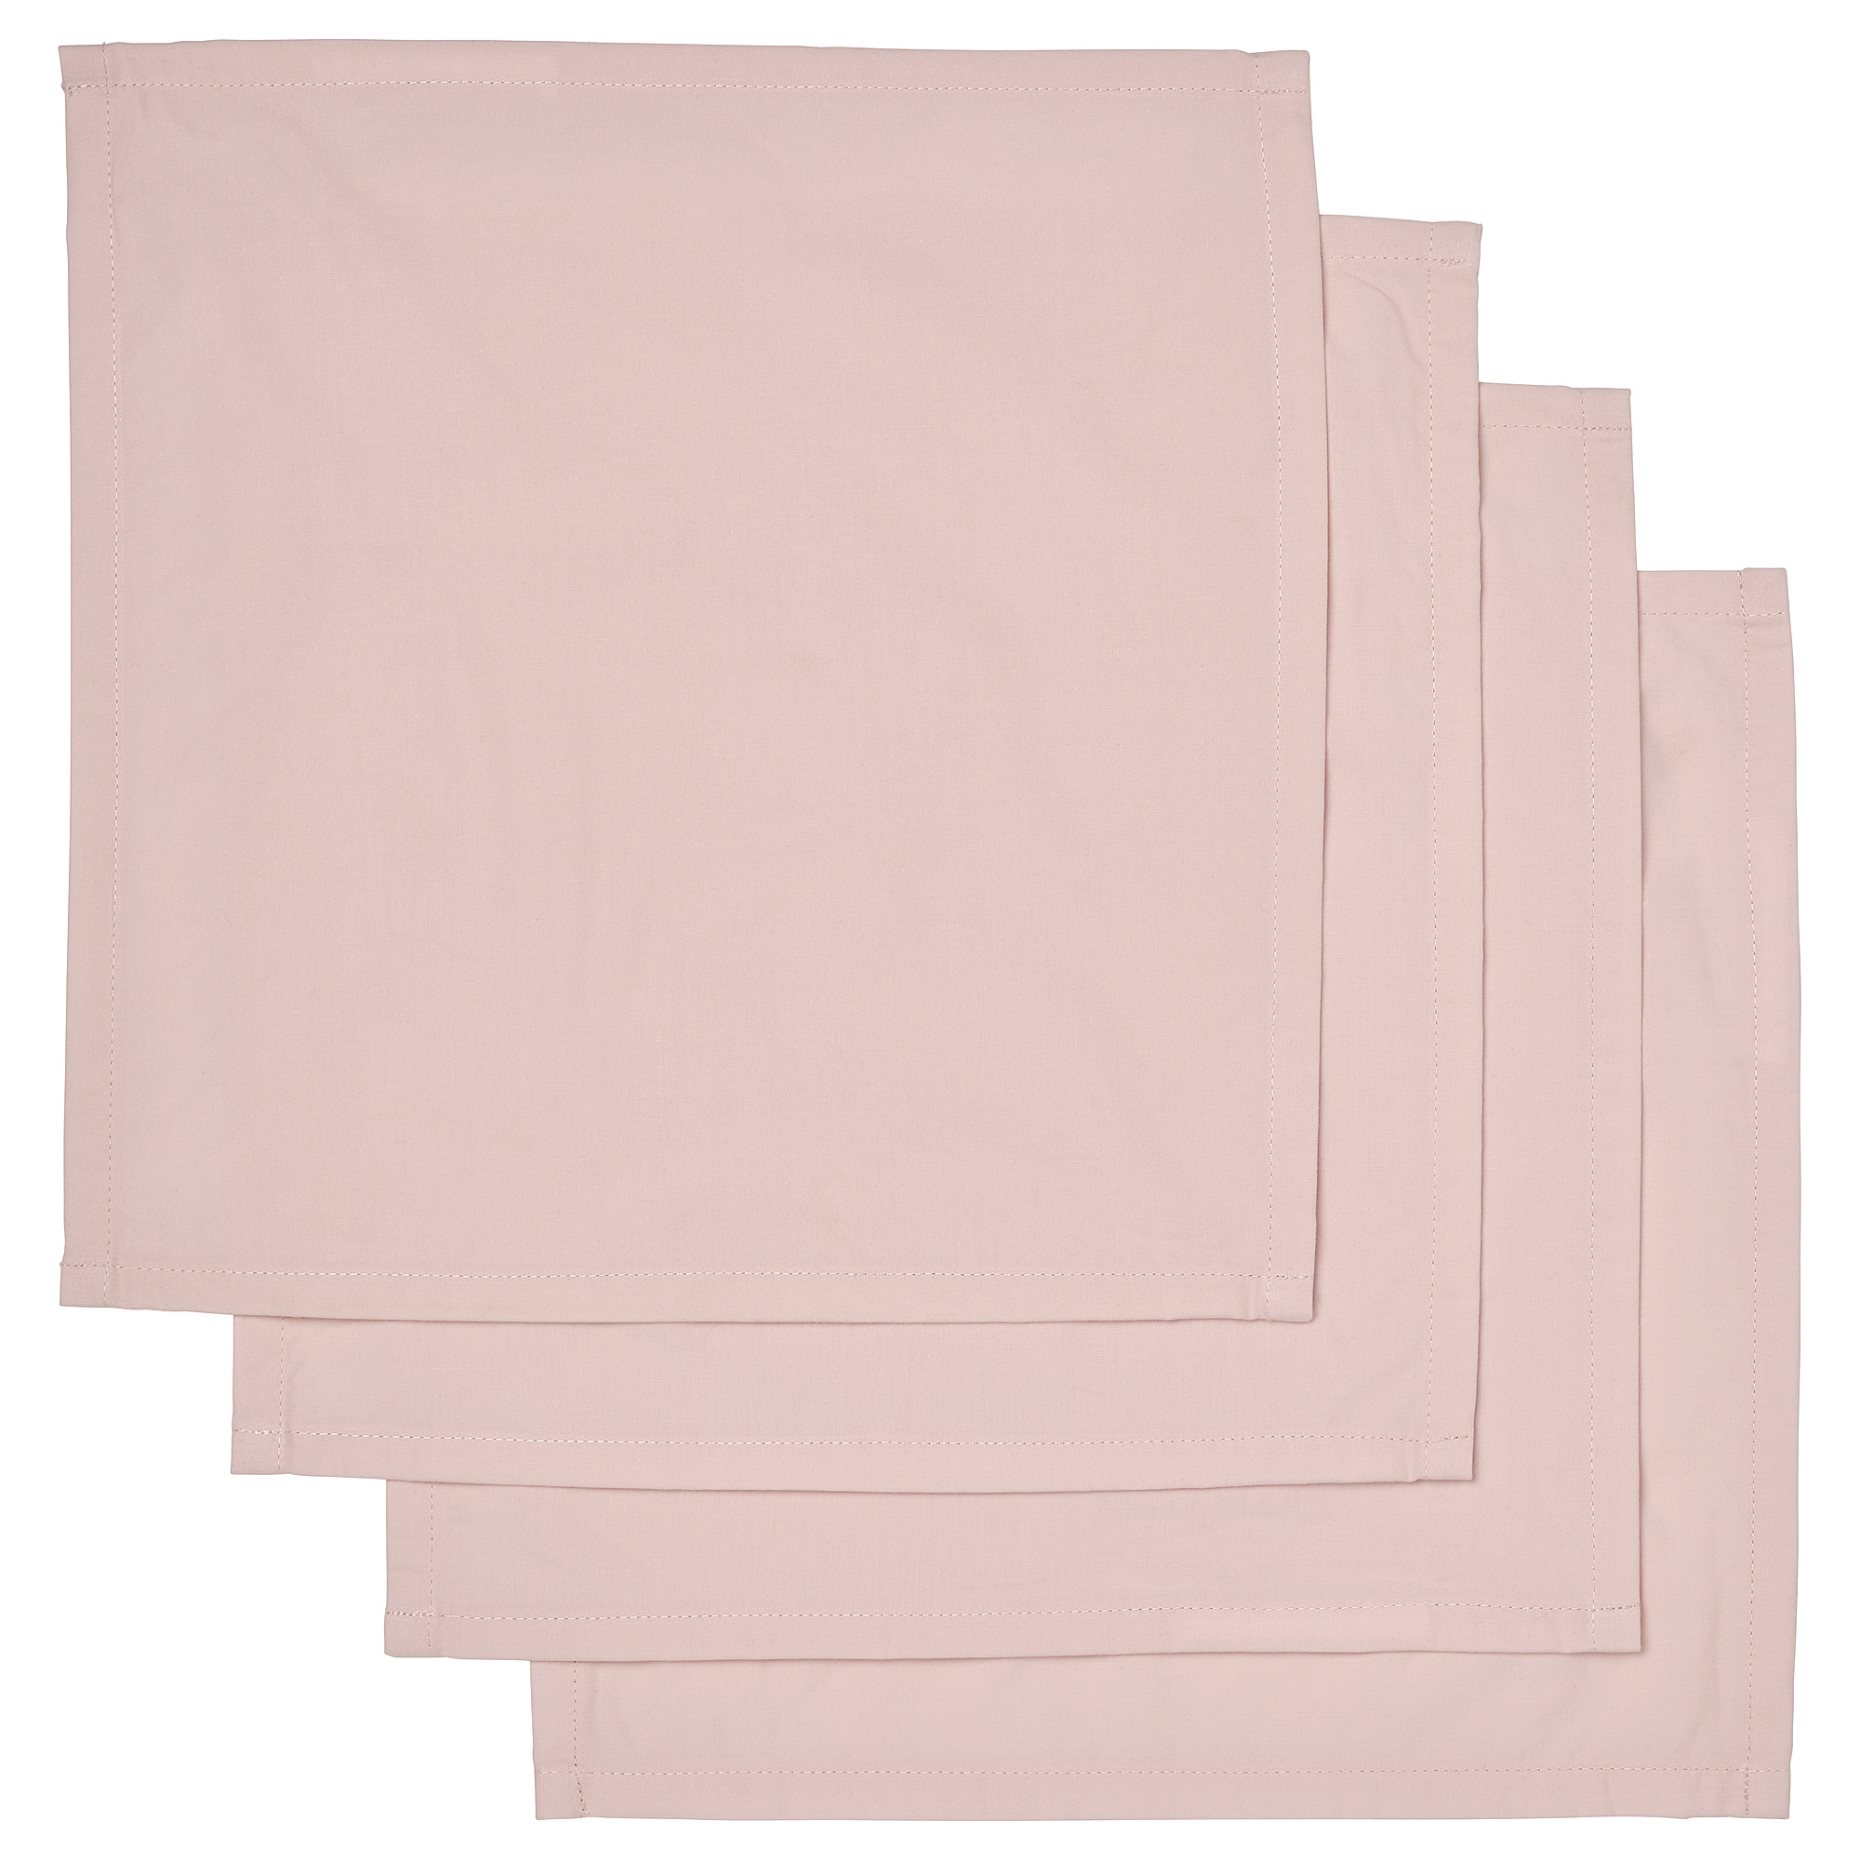 NABBFISK, napkin/4 pack, 30x30 cm, 105.711.22